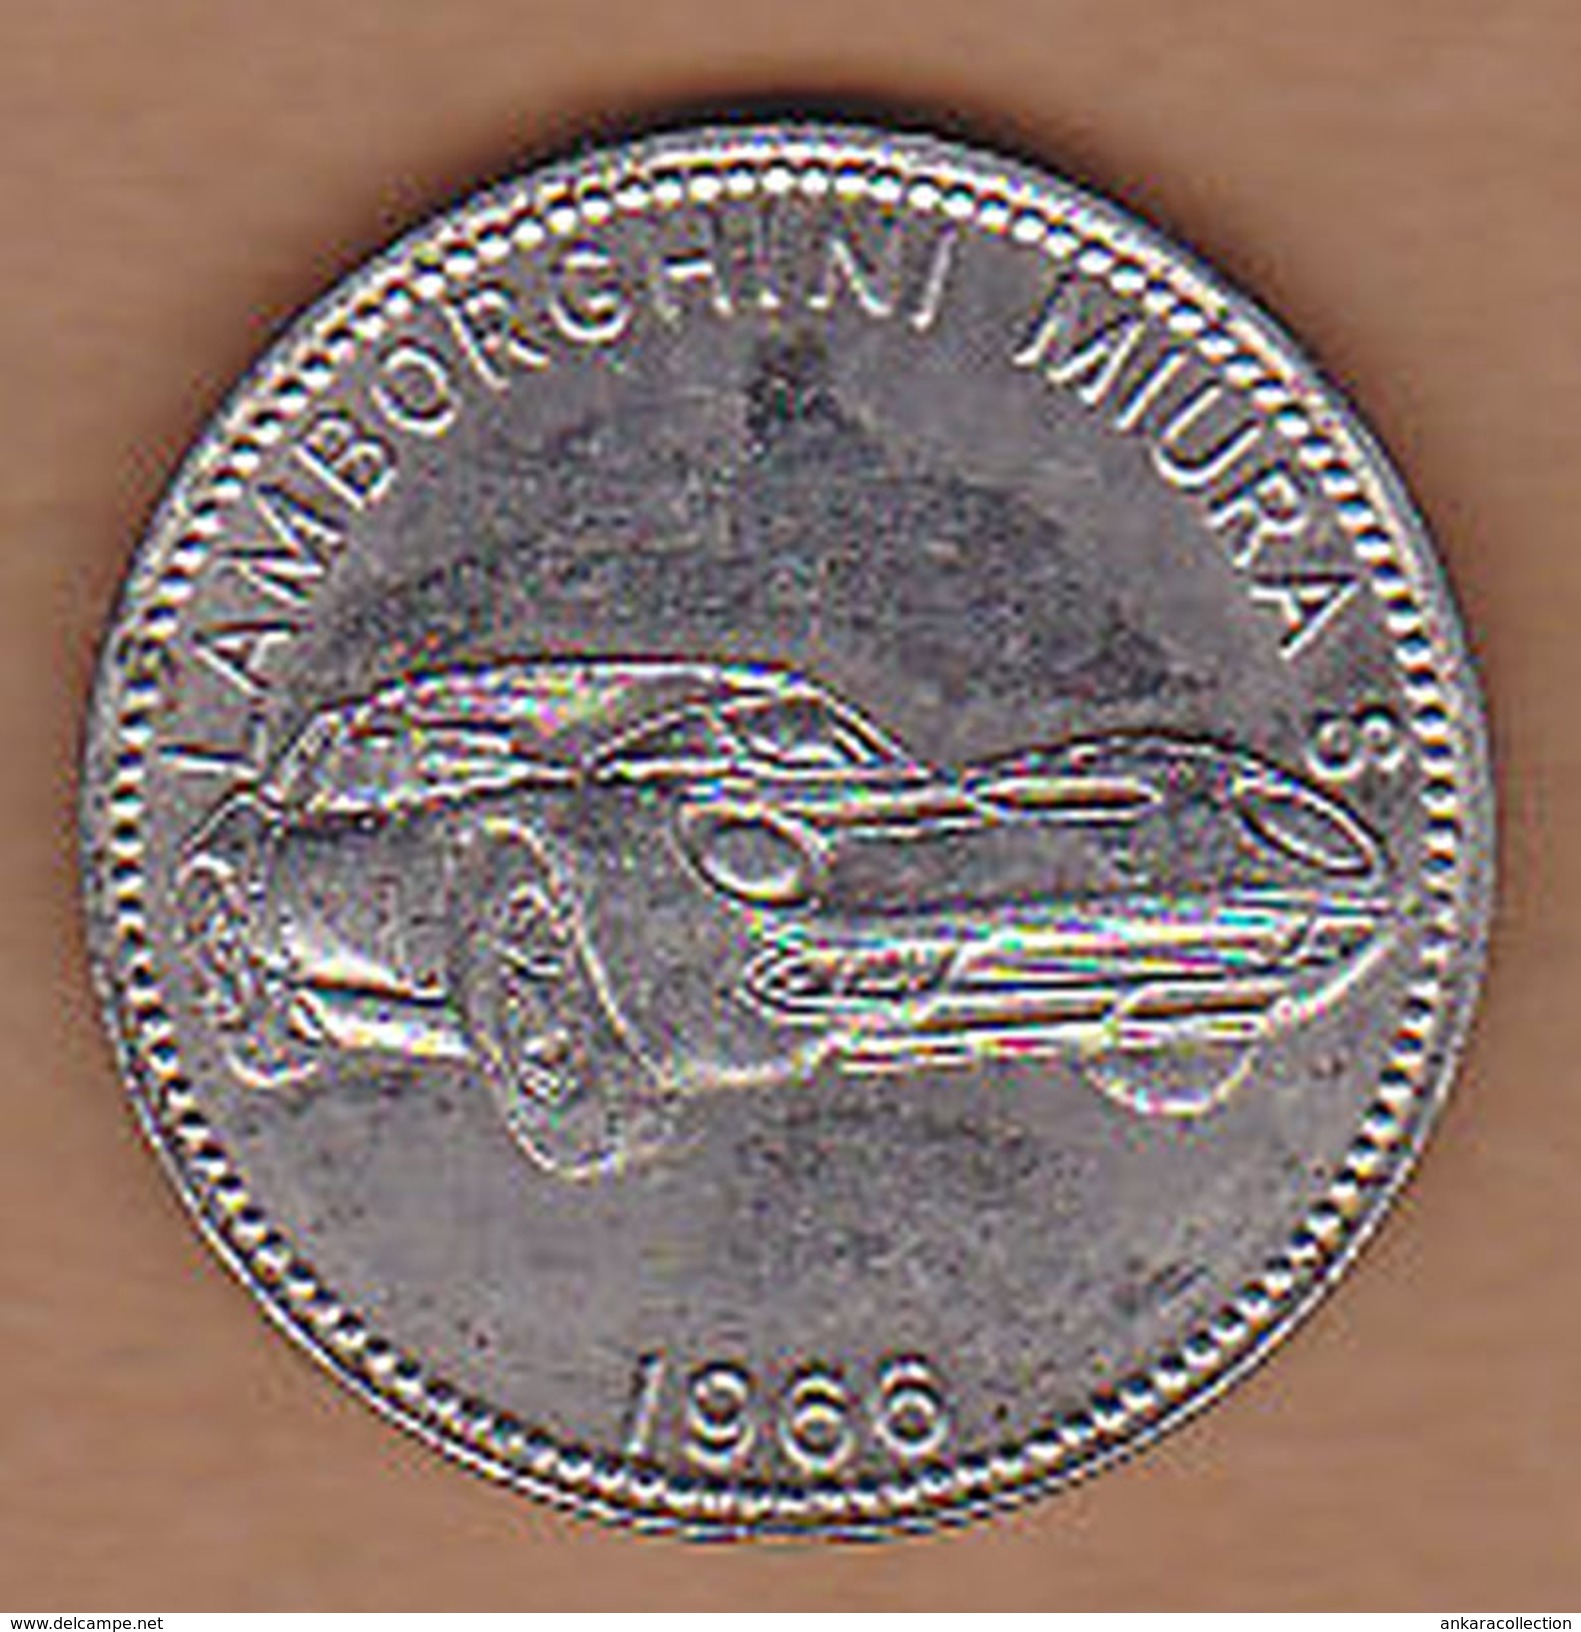 AC -  LAMBORGHINI MIURA S 1966 SHELL WELTBERUHMTE SPORTWAGEN TOKEN - JETON - Monedas / De Necesidad